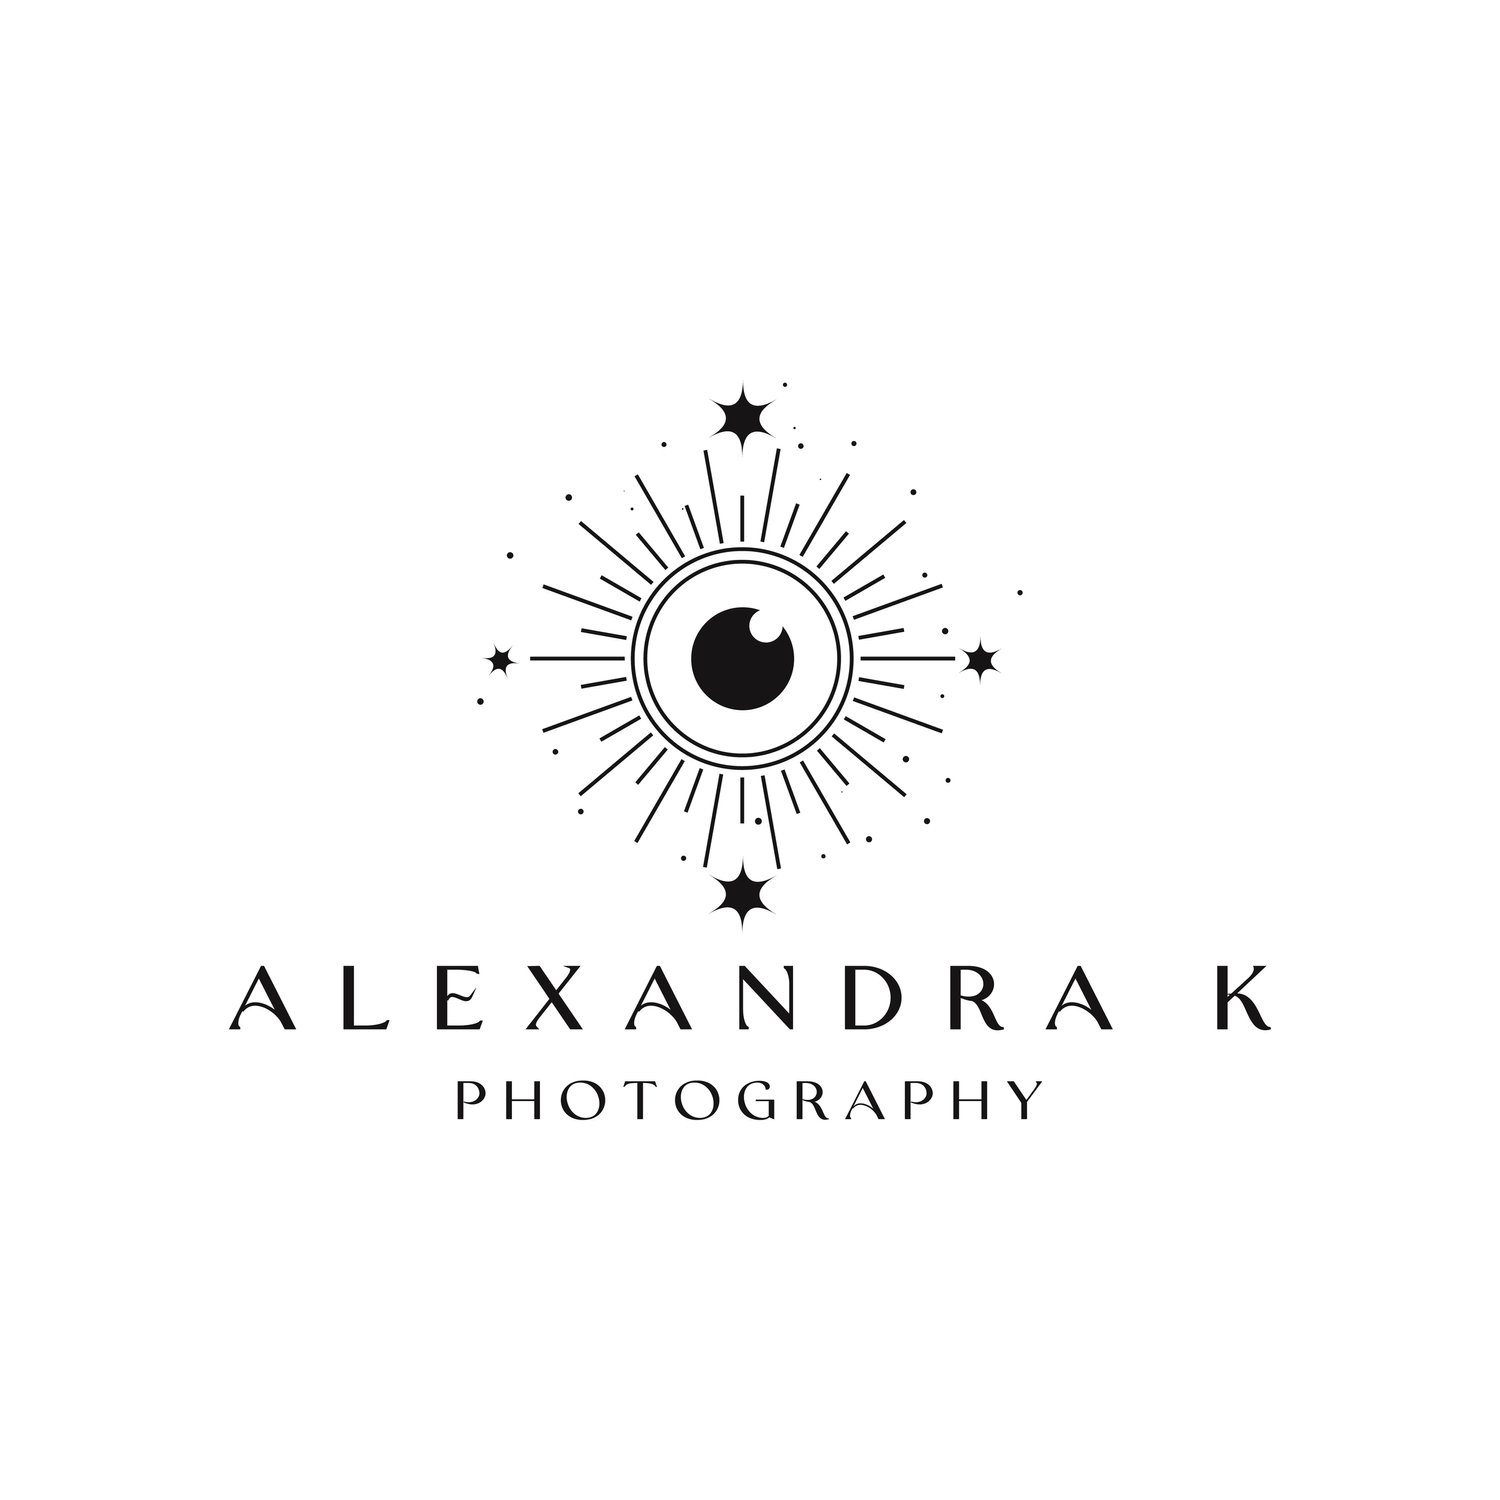 About — Alexandra K Photography